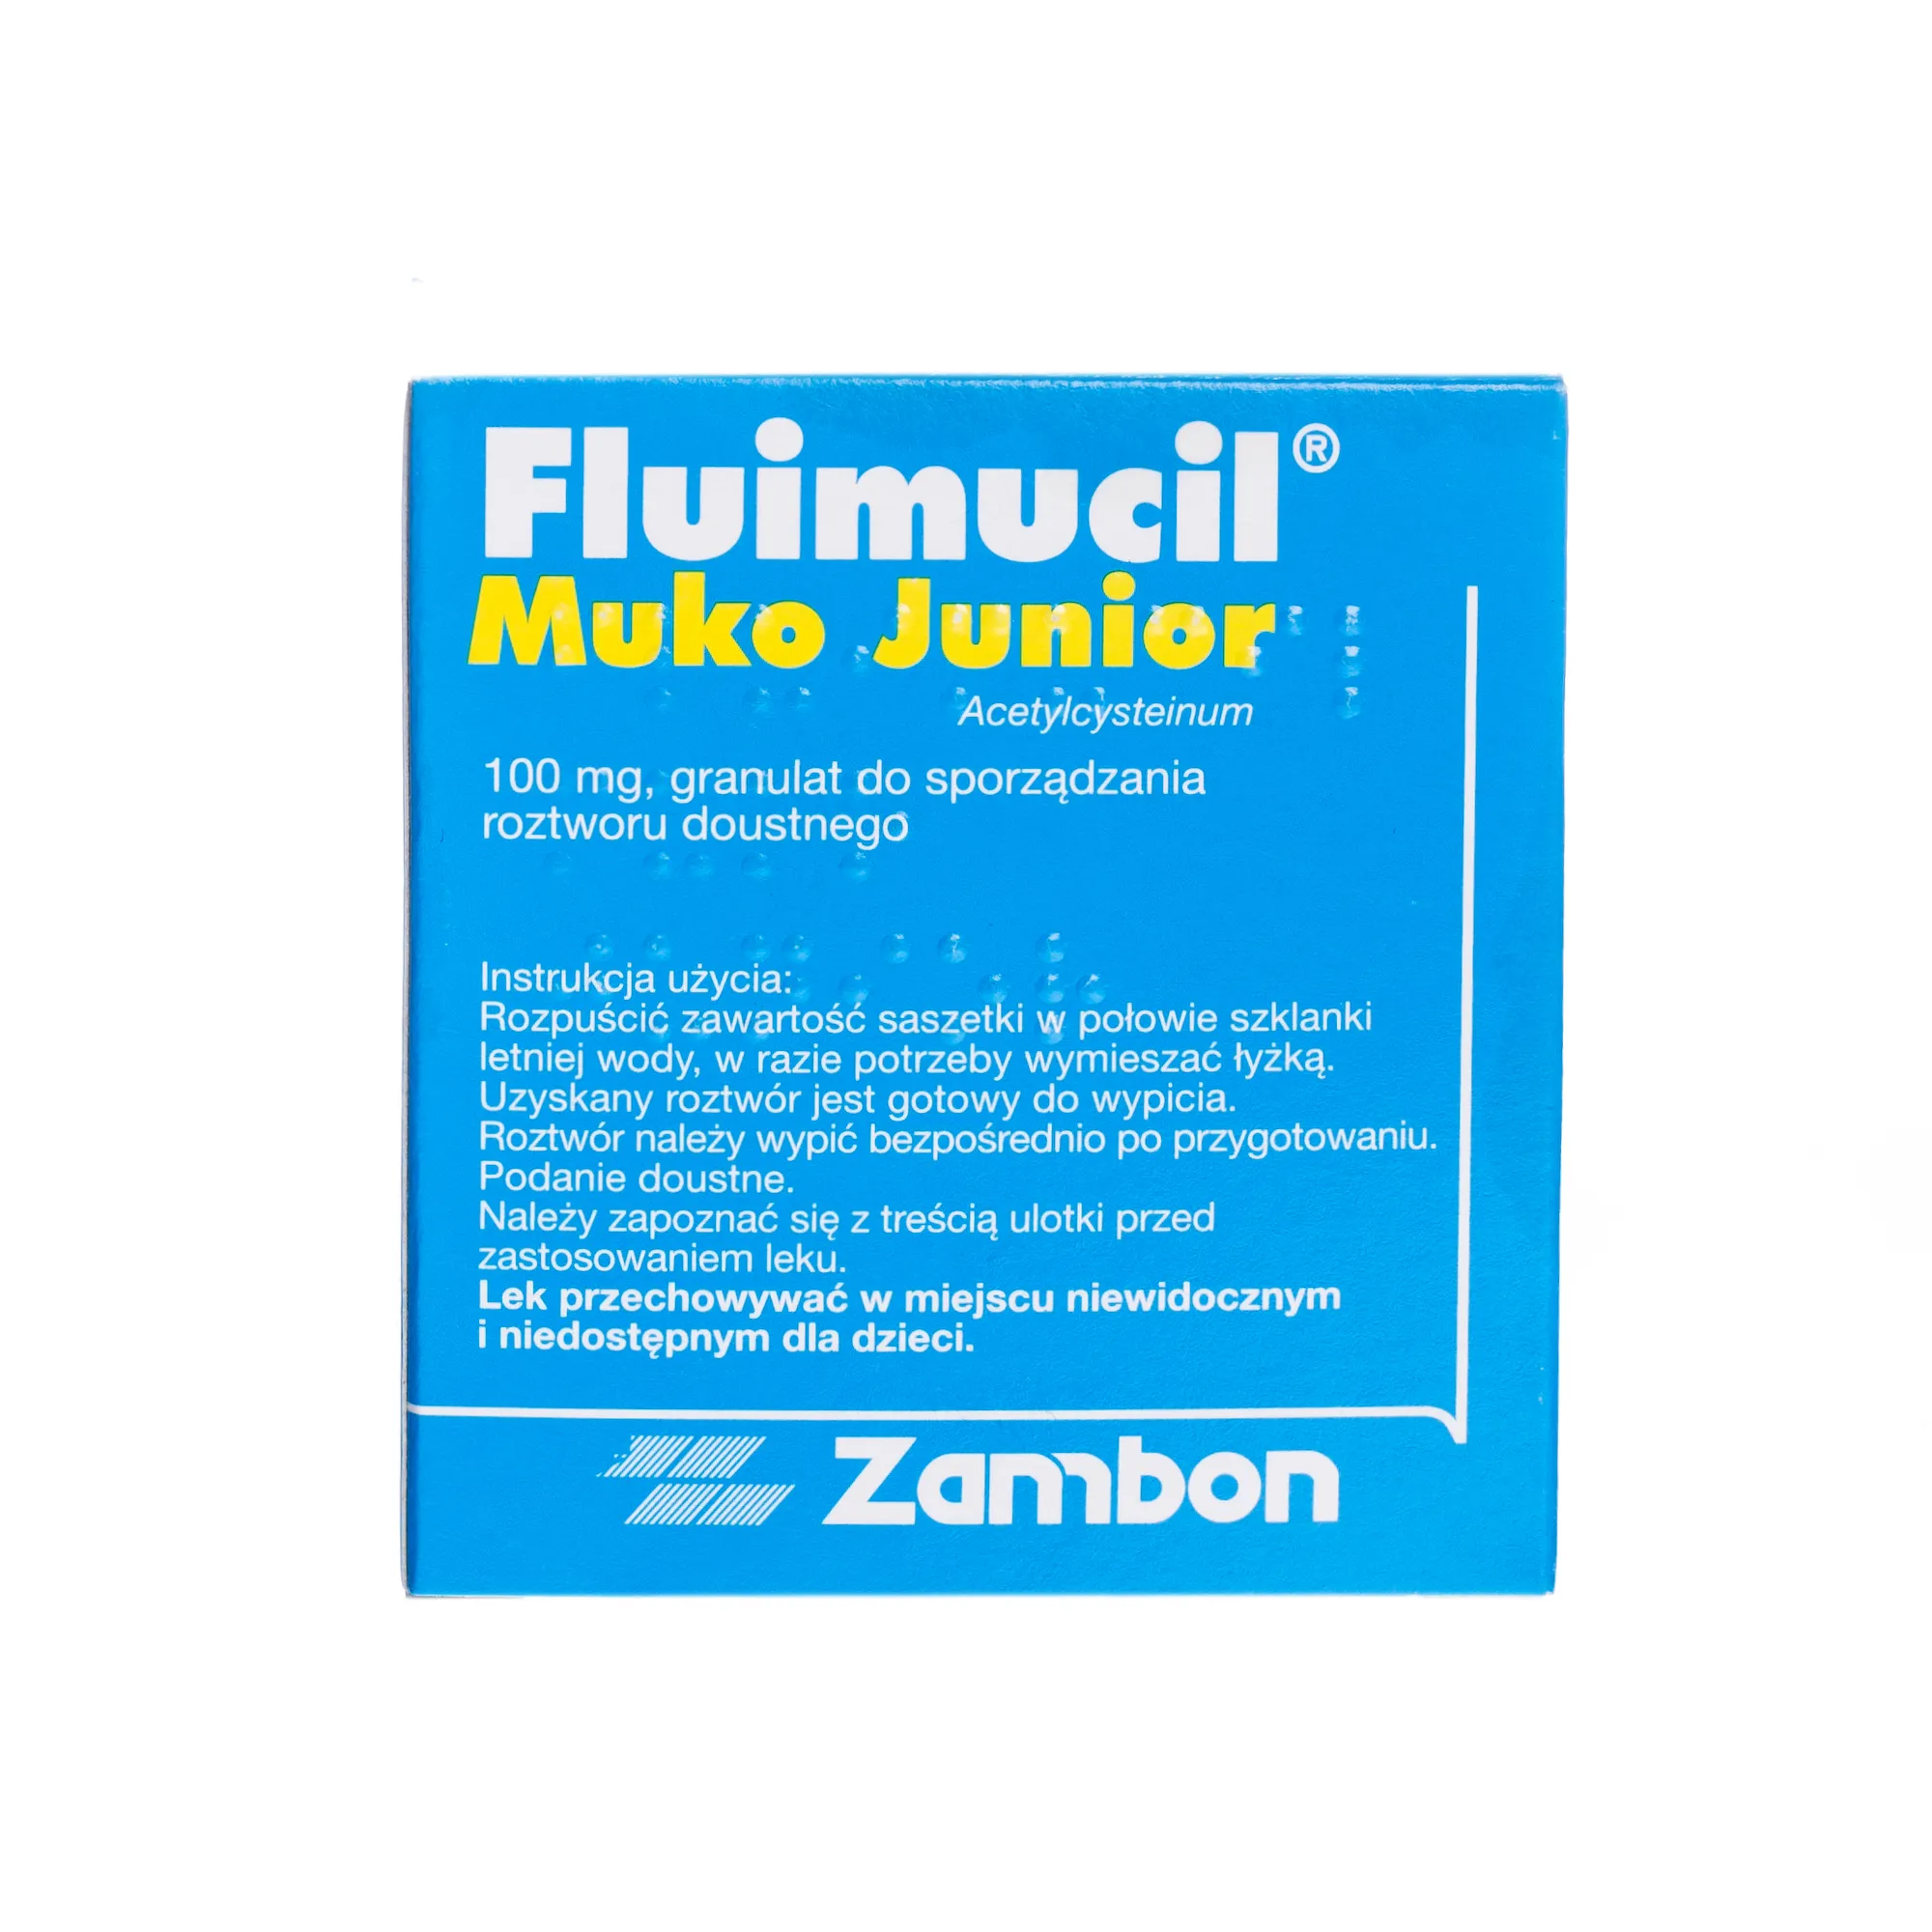 Fluimucil Muko Junior, 100 mg, granulat, 20 saszetek 